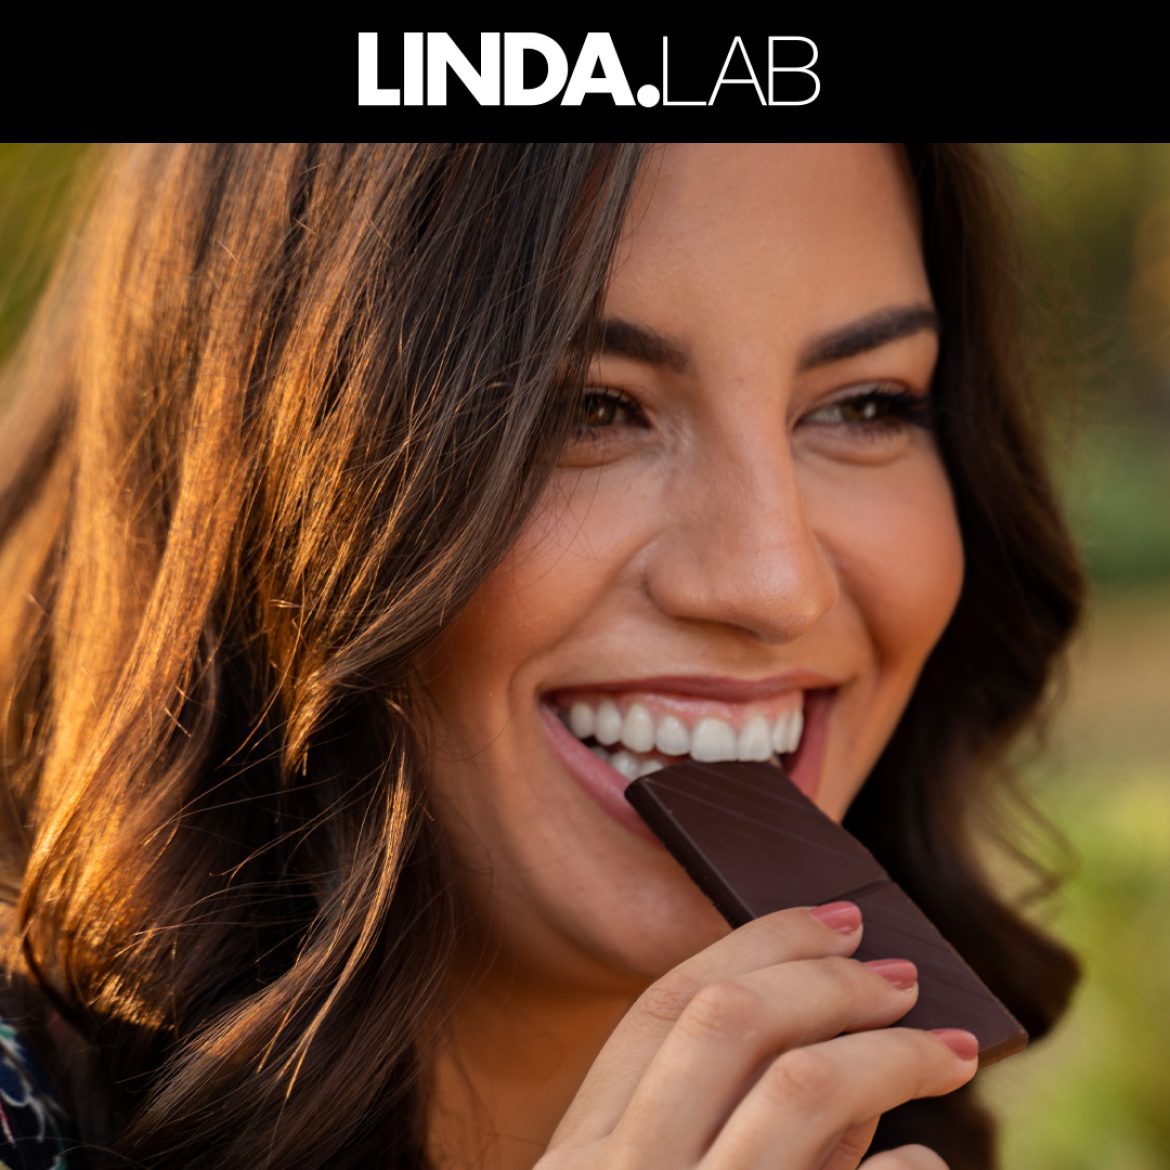 Vrouw eet chocolade